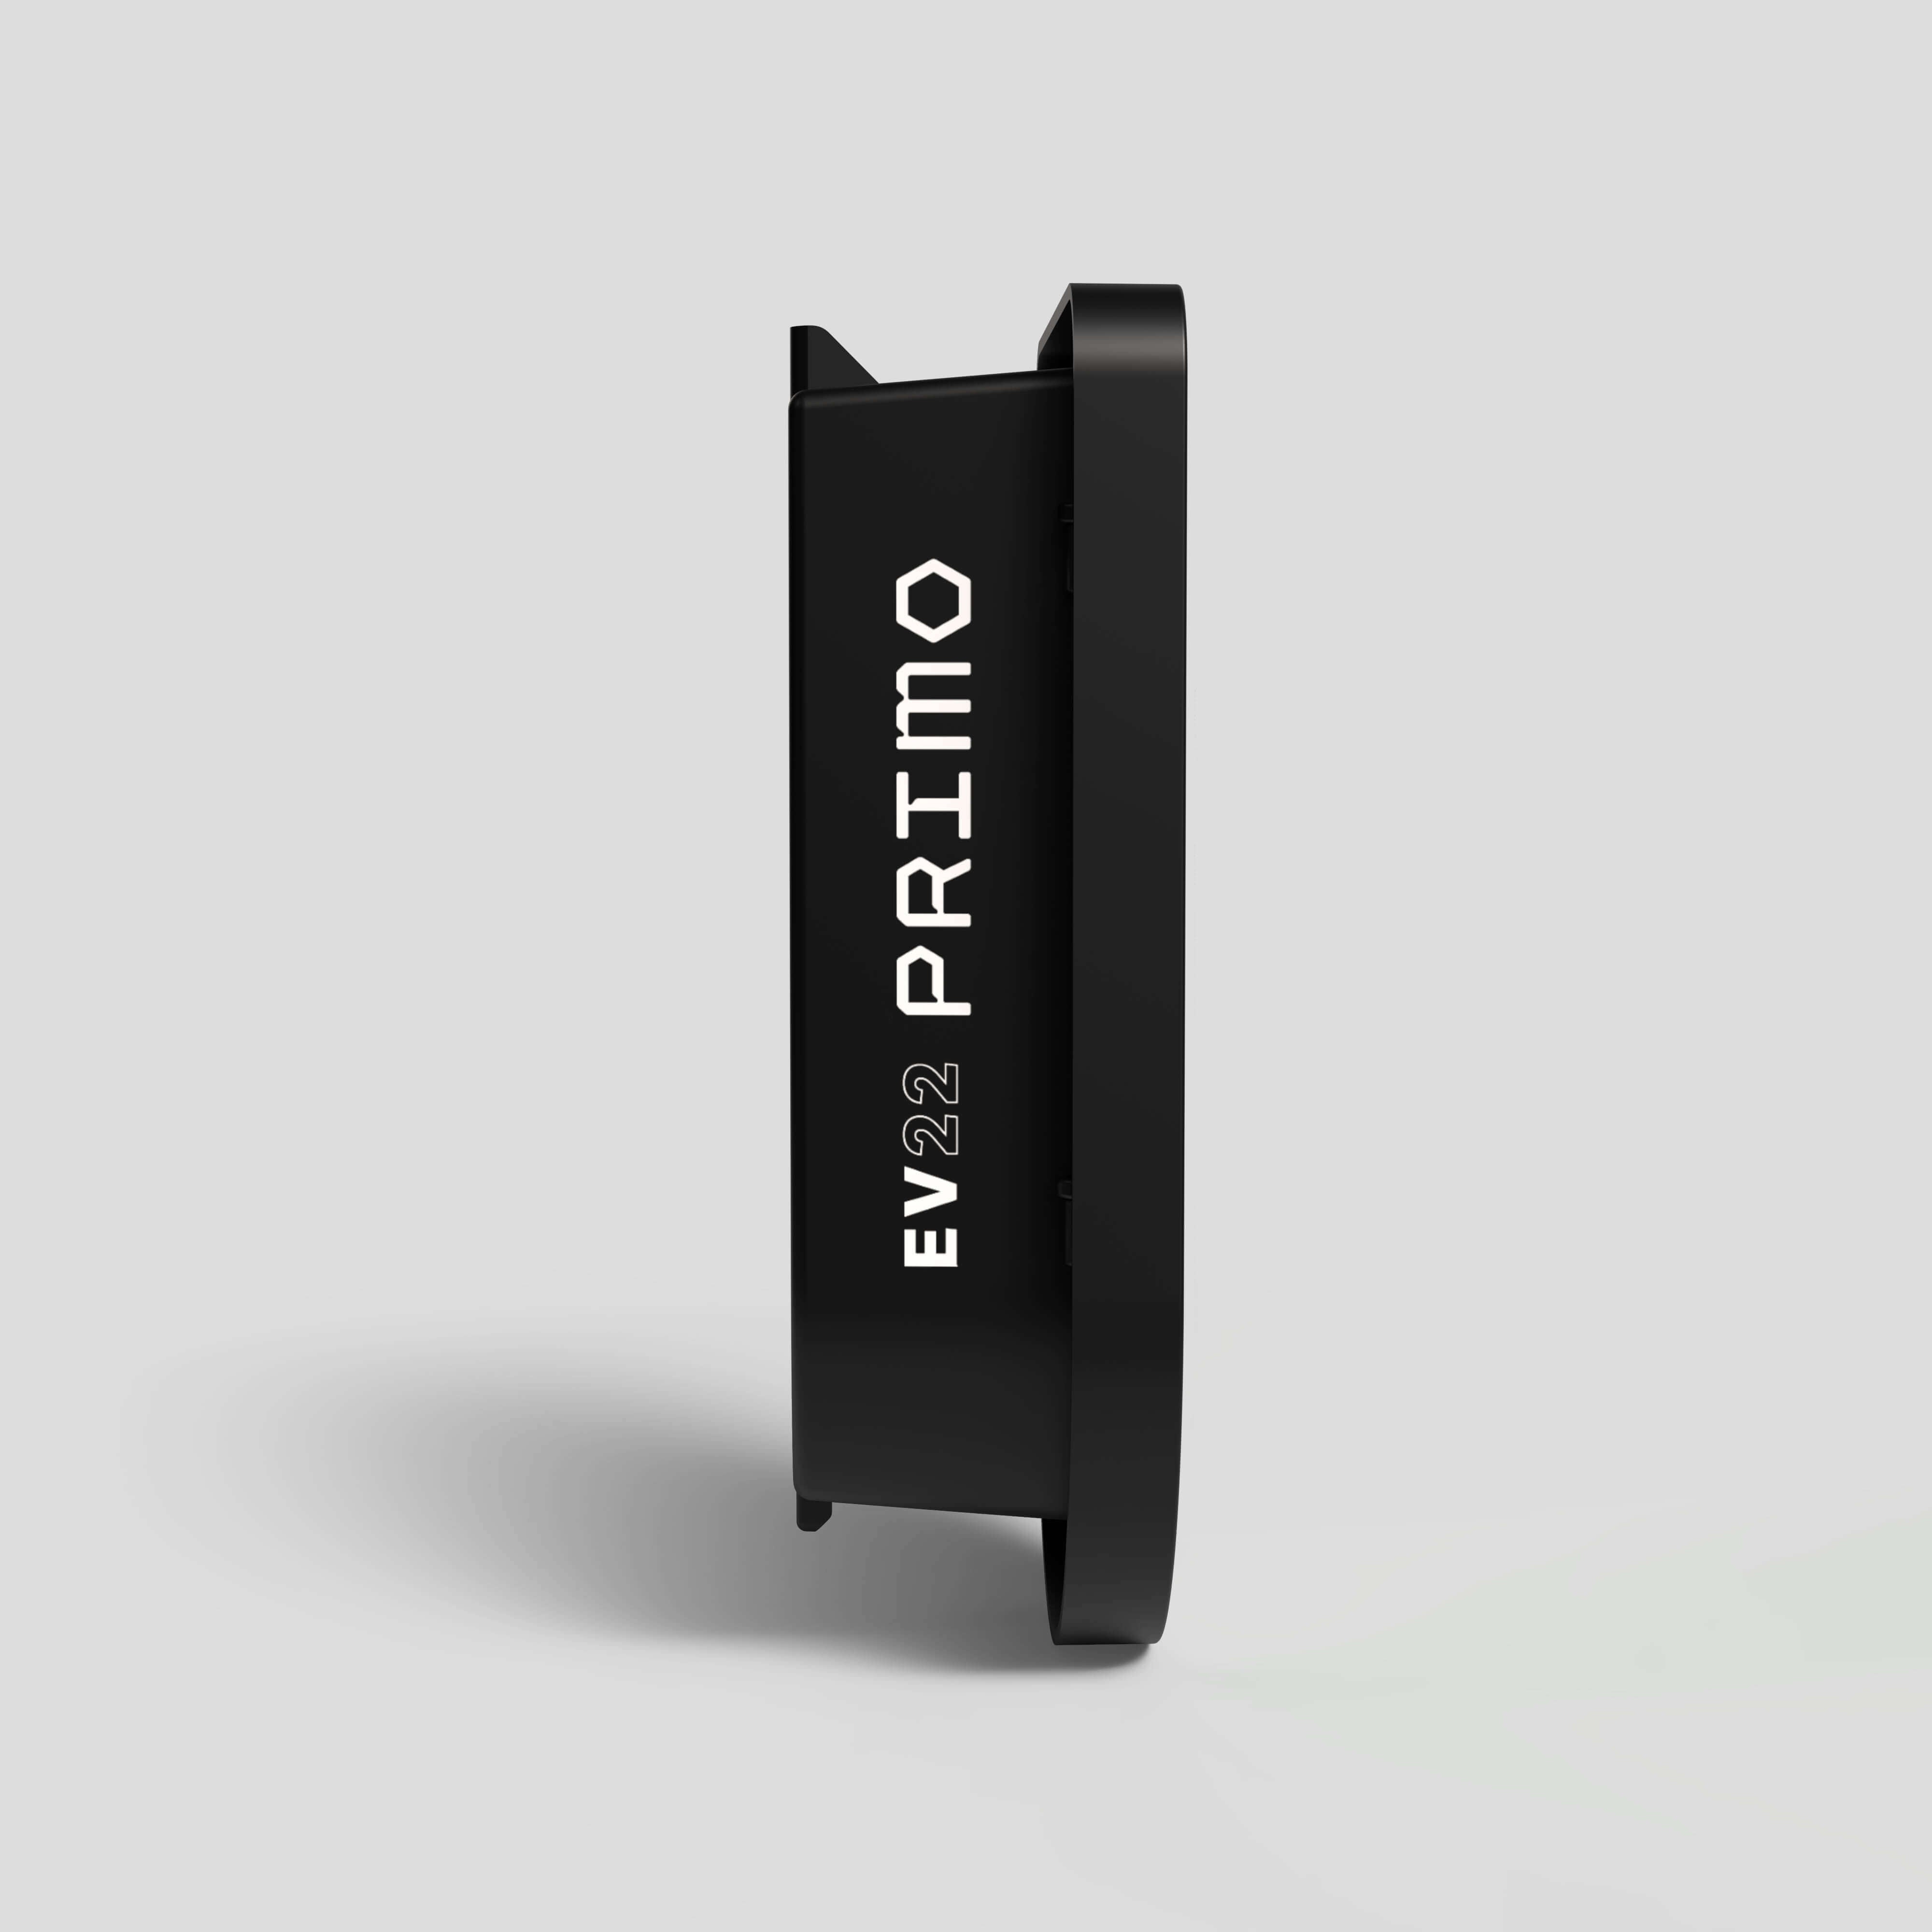 techtron EV22 PRIMO - Voice Controlled + Touchscreen ev-Charger (22 kW, Level 3) - Type 2 techtron